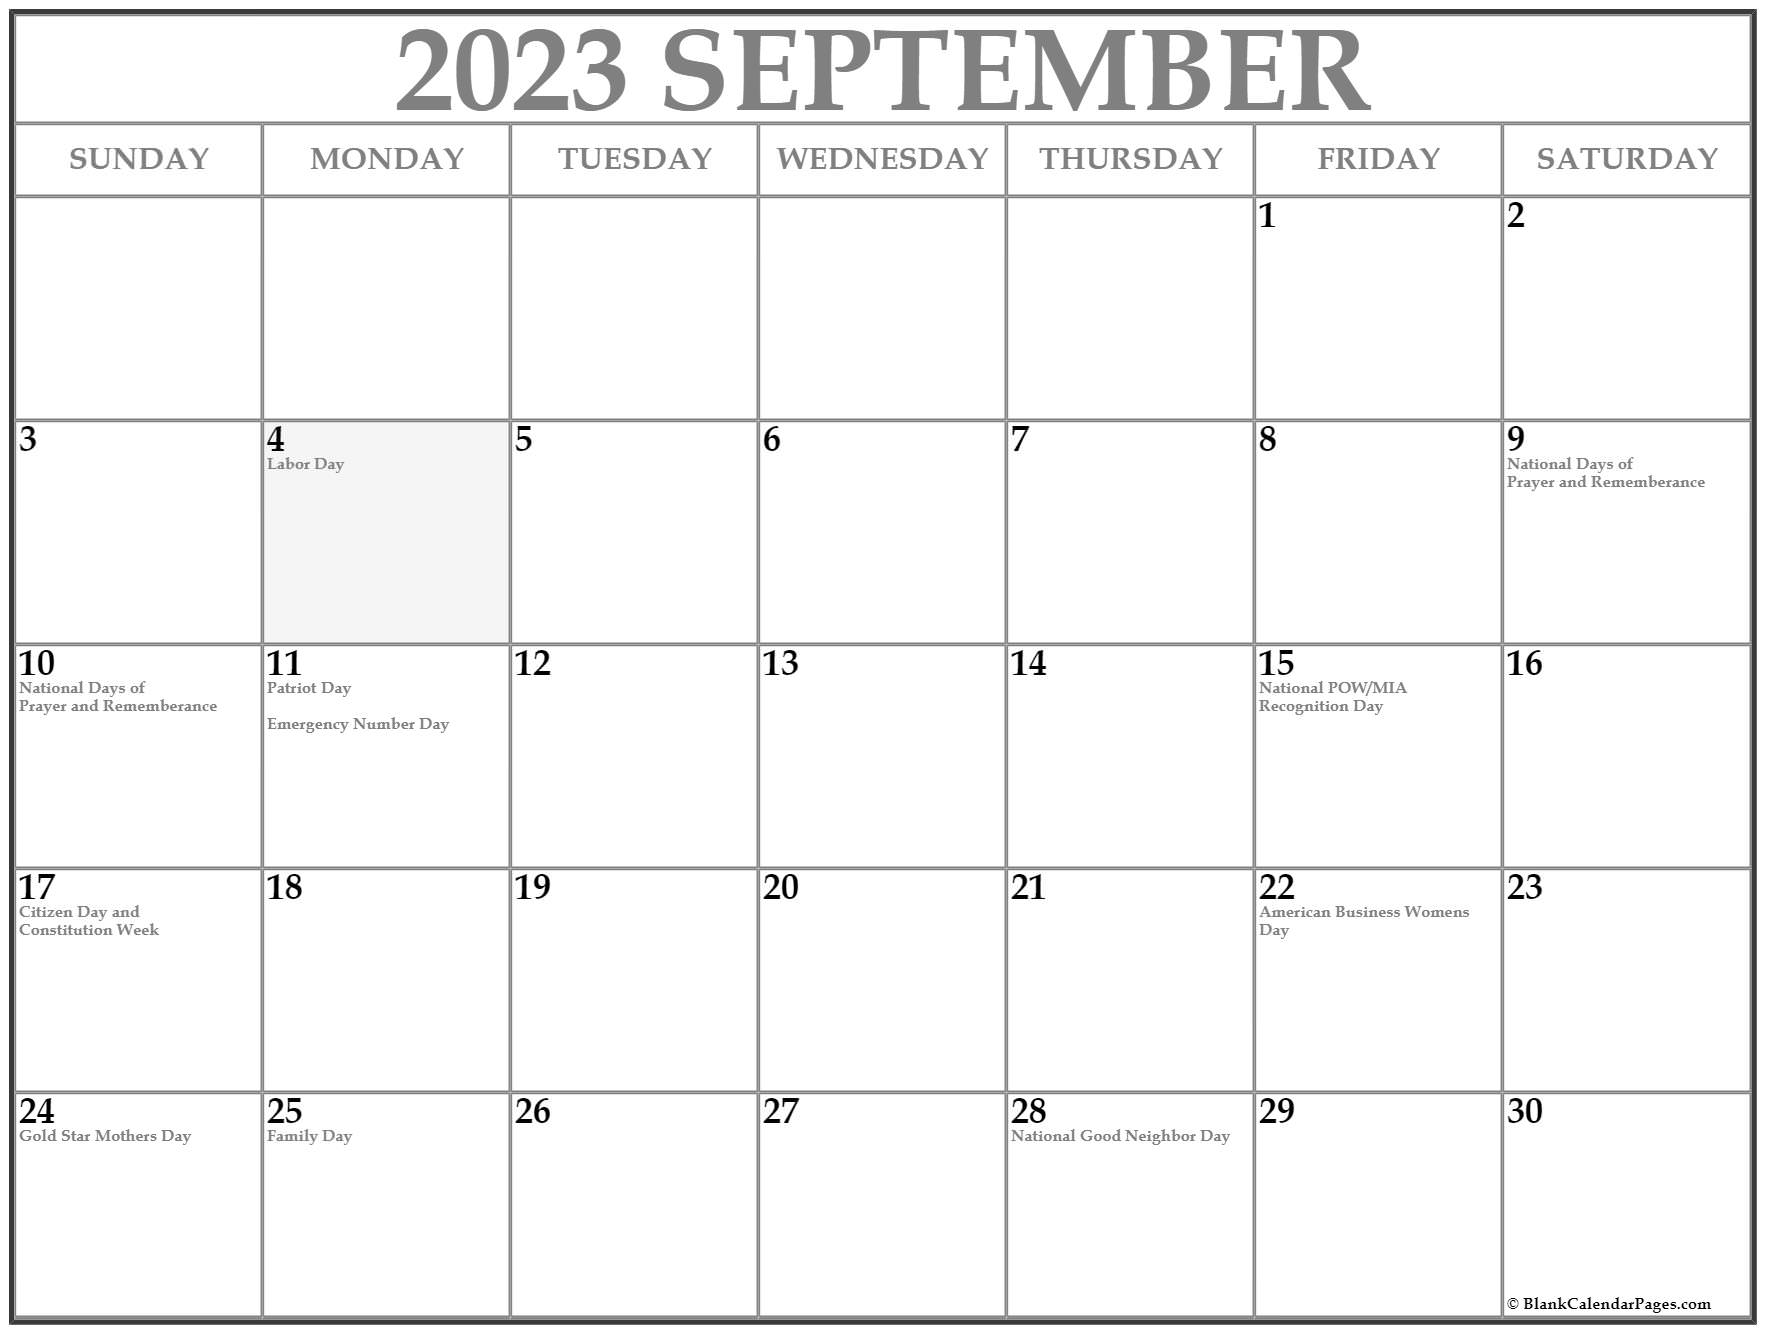 ochsner-employee-holiday-calendar-2022-printable-word-searches